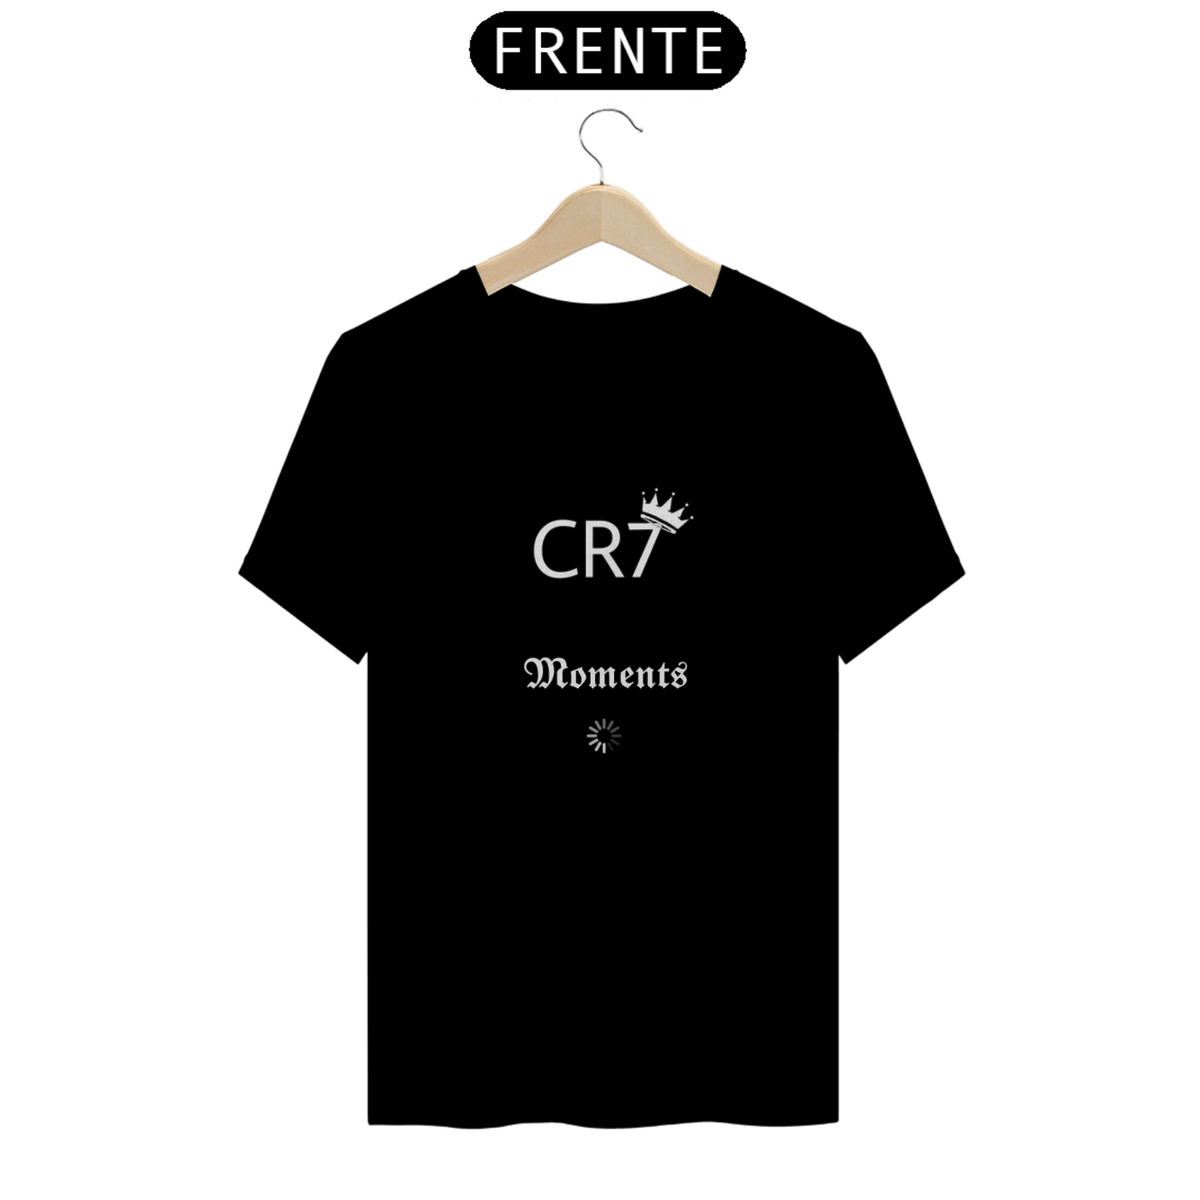 Nome do produto: Camiseta CR7 momentos 